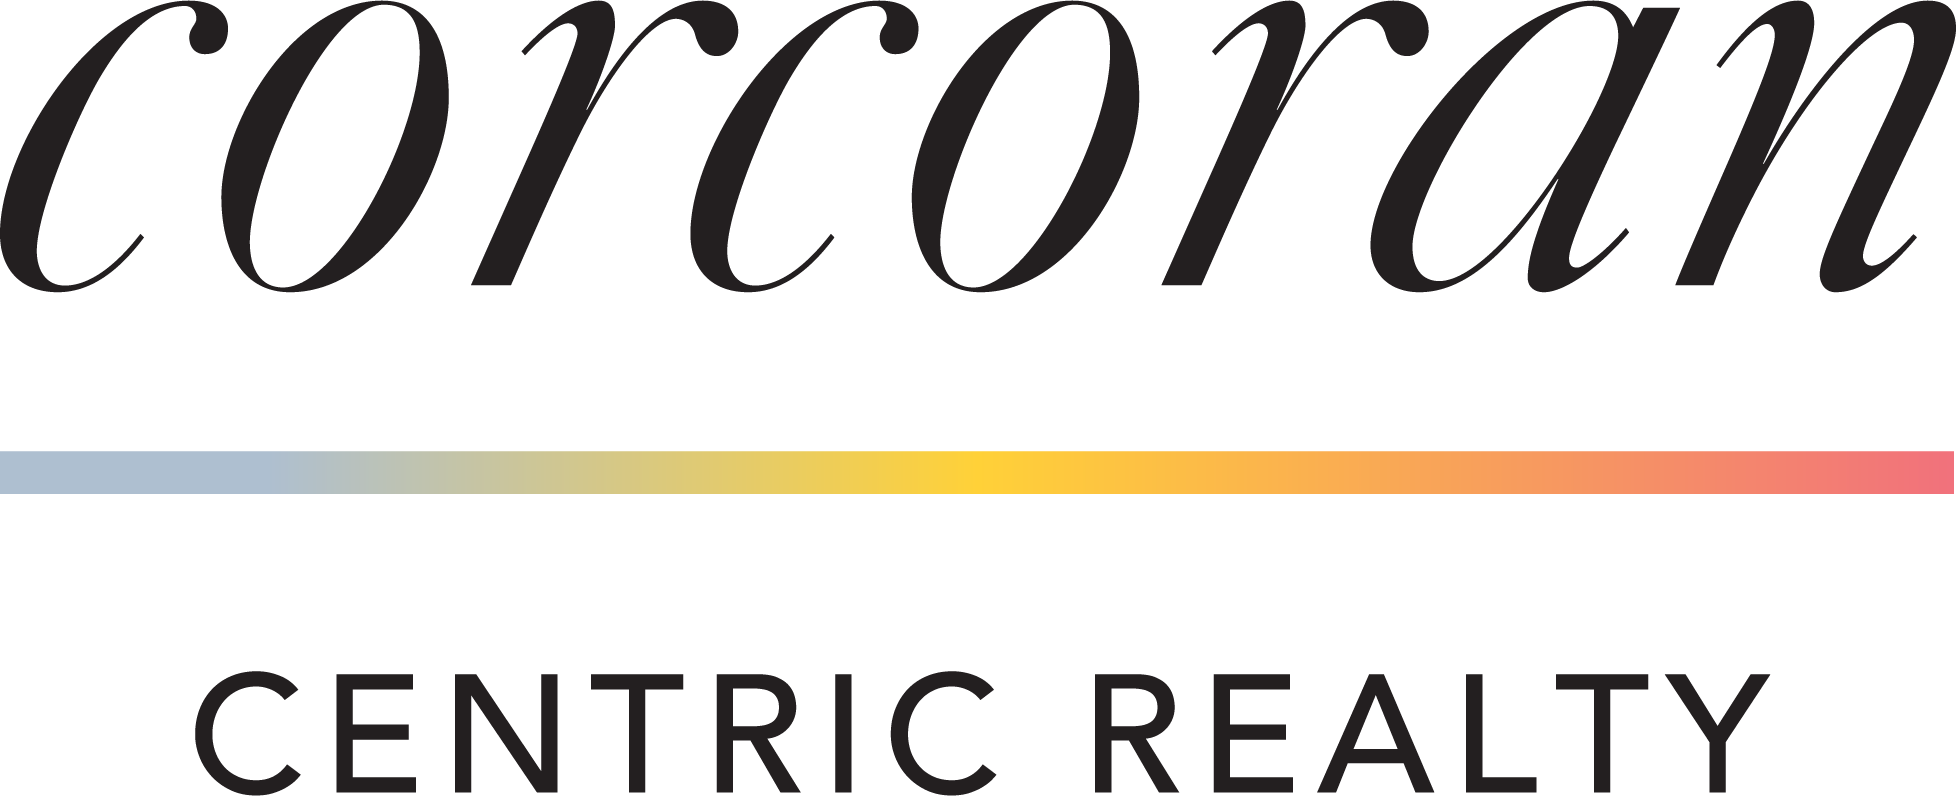 Corcoran Centric Realty logo